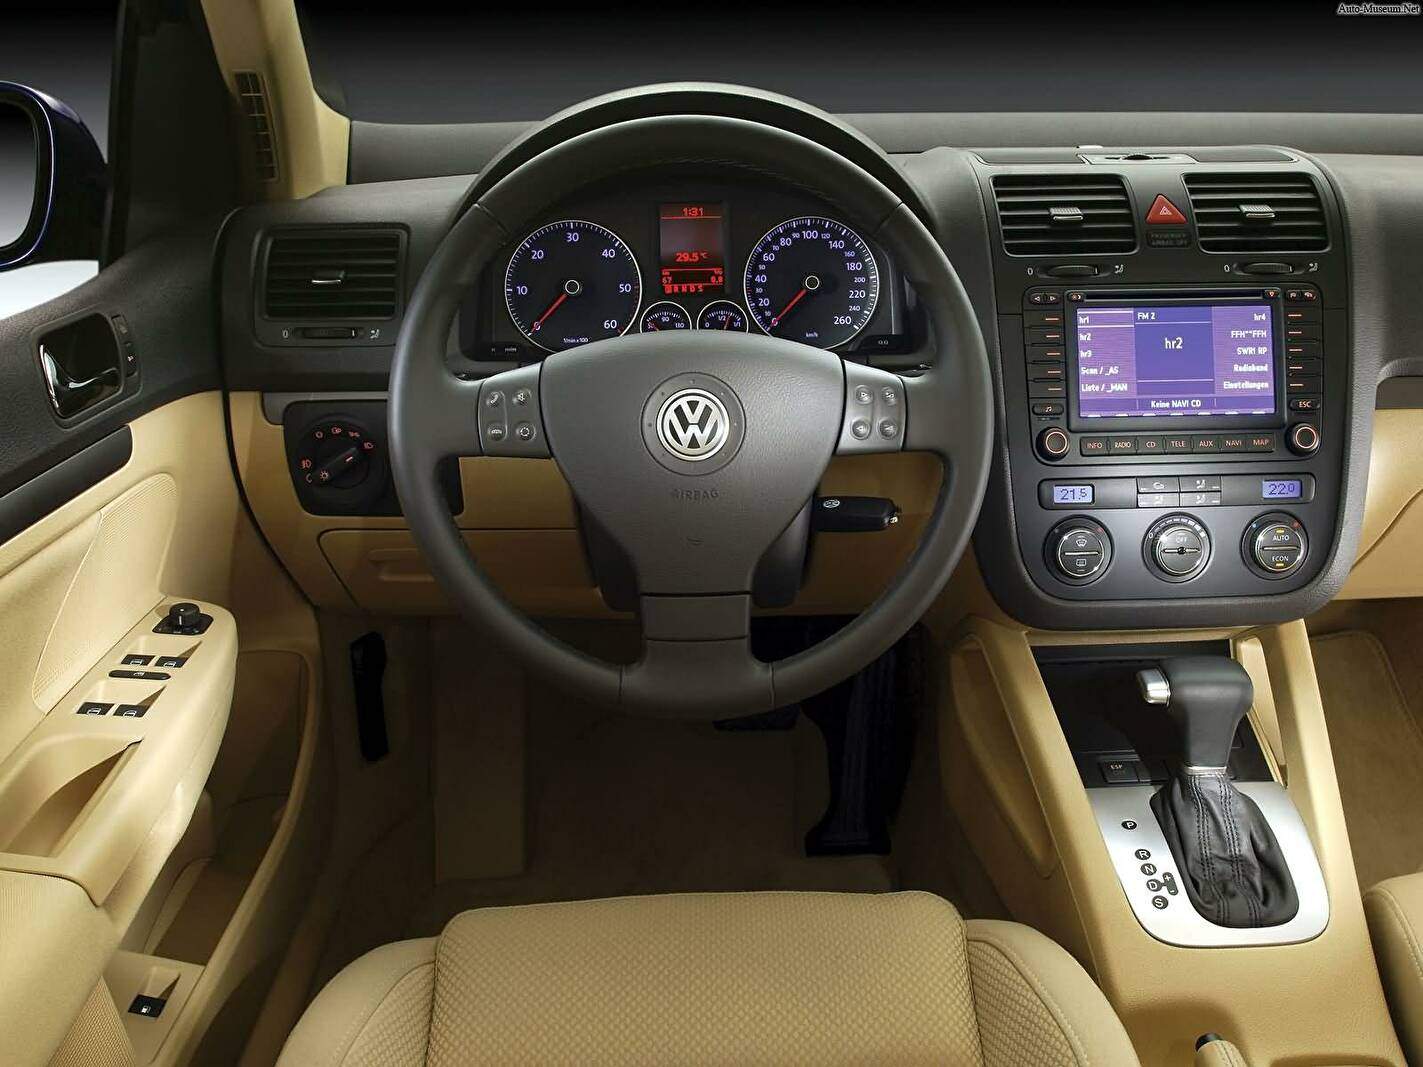 Volkswagen Golf V 2.0 FSI 150 (Typ 1K) (2004-2008),  ajouté par lioenzo